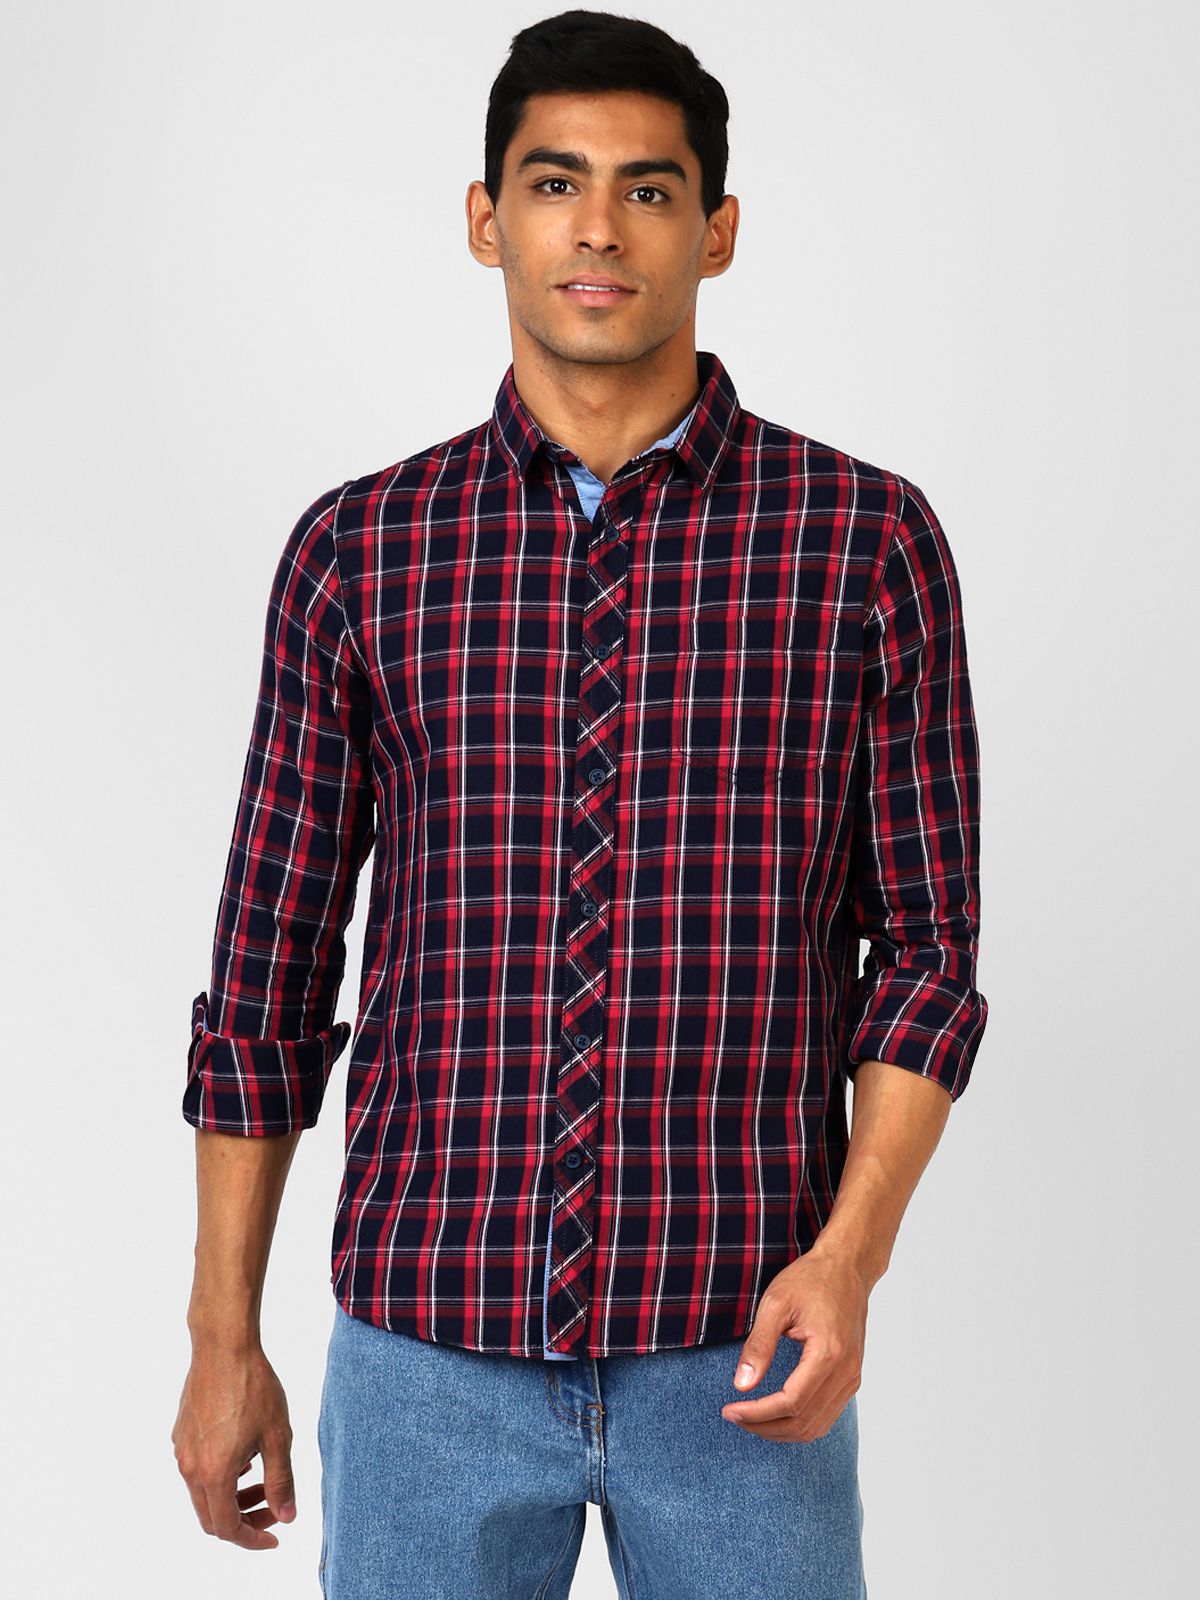     			UrbanMark Men 100% Cotton Full Sleeves Regular Fit Check Casual Shirt-Red & Black